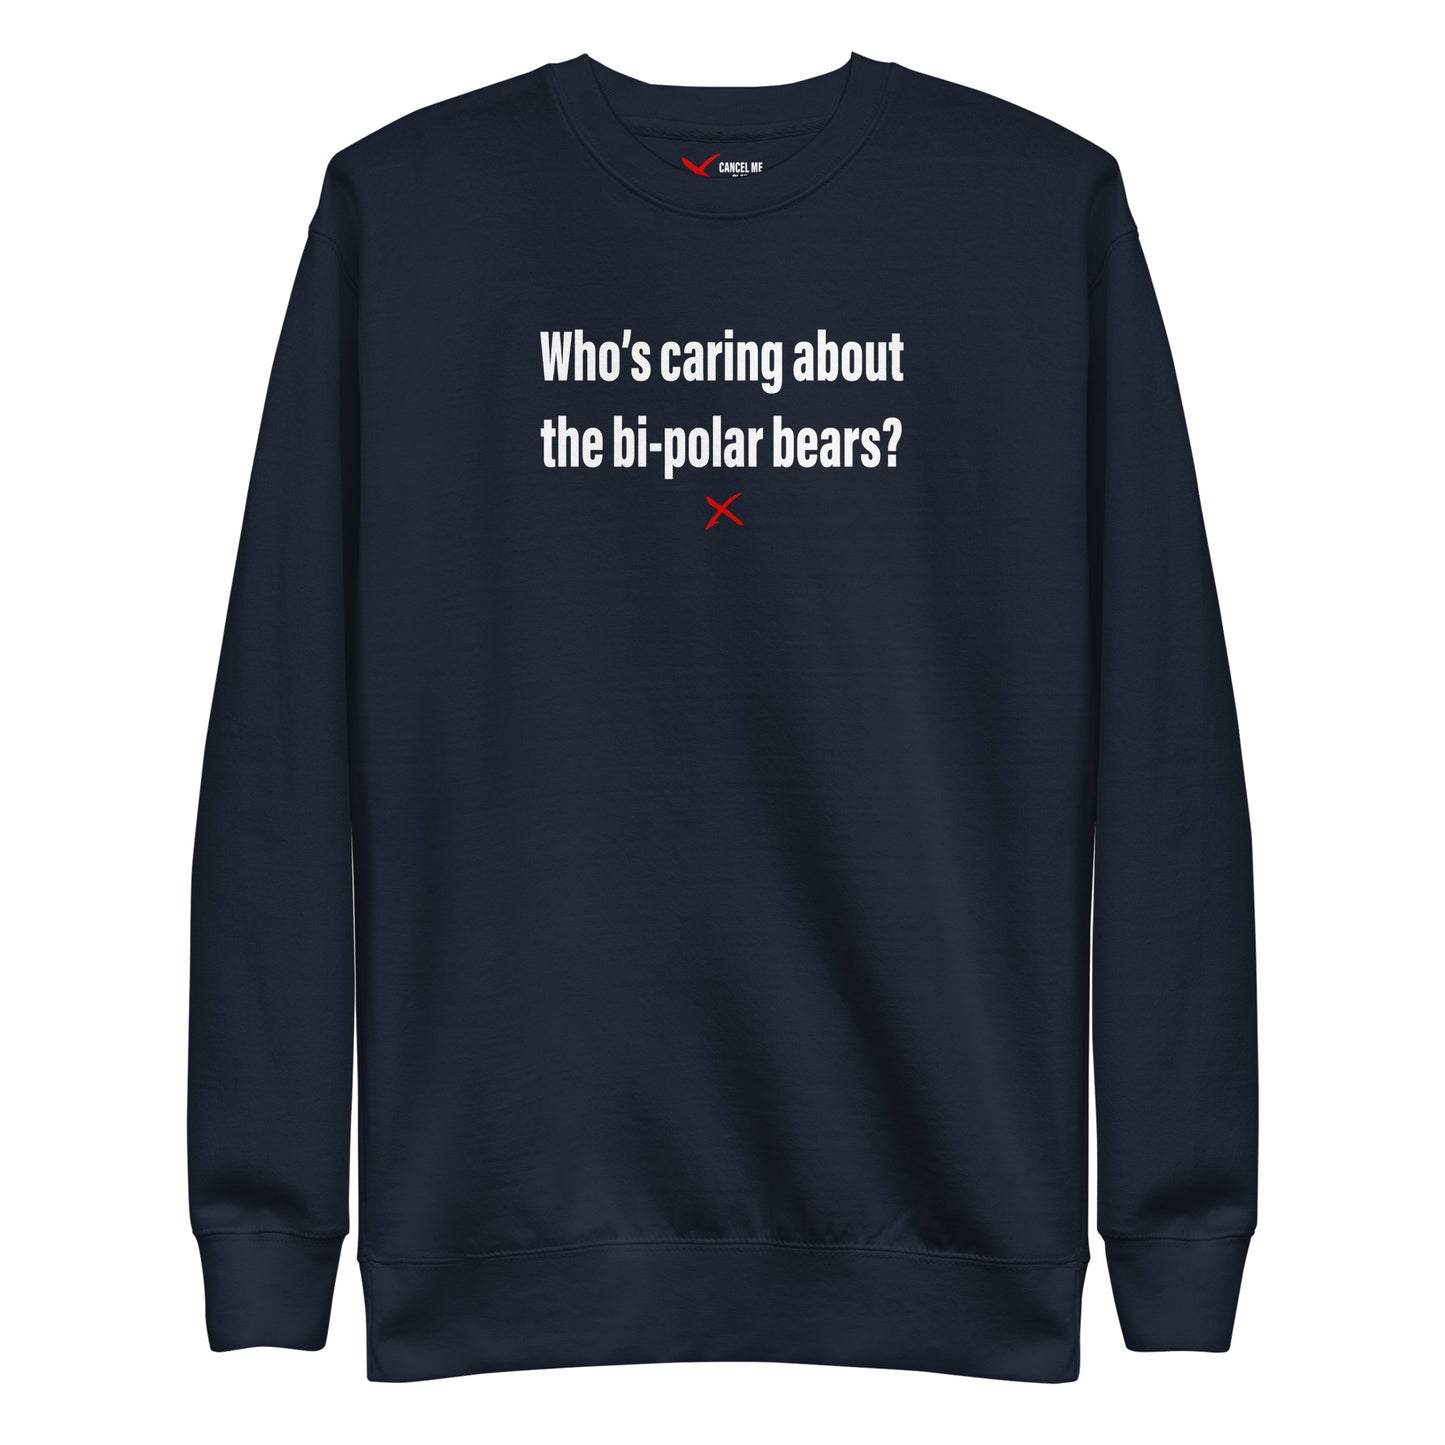 Who's caring about the bi-polar bears? - Sweatshirt